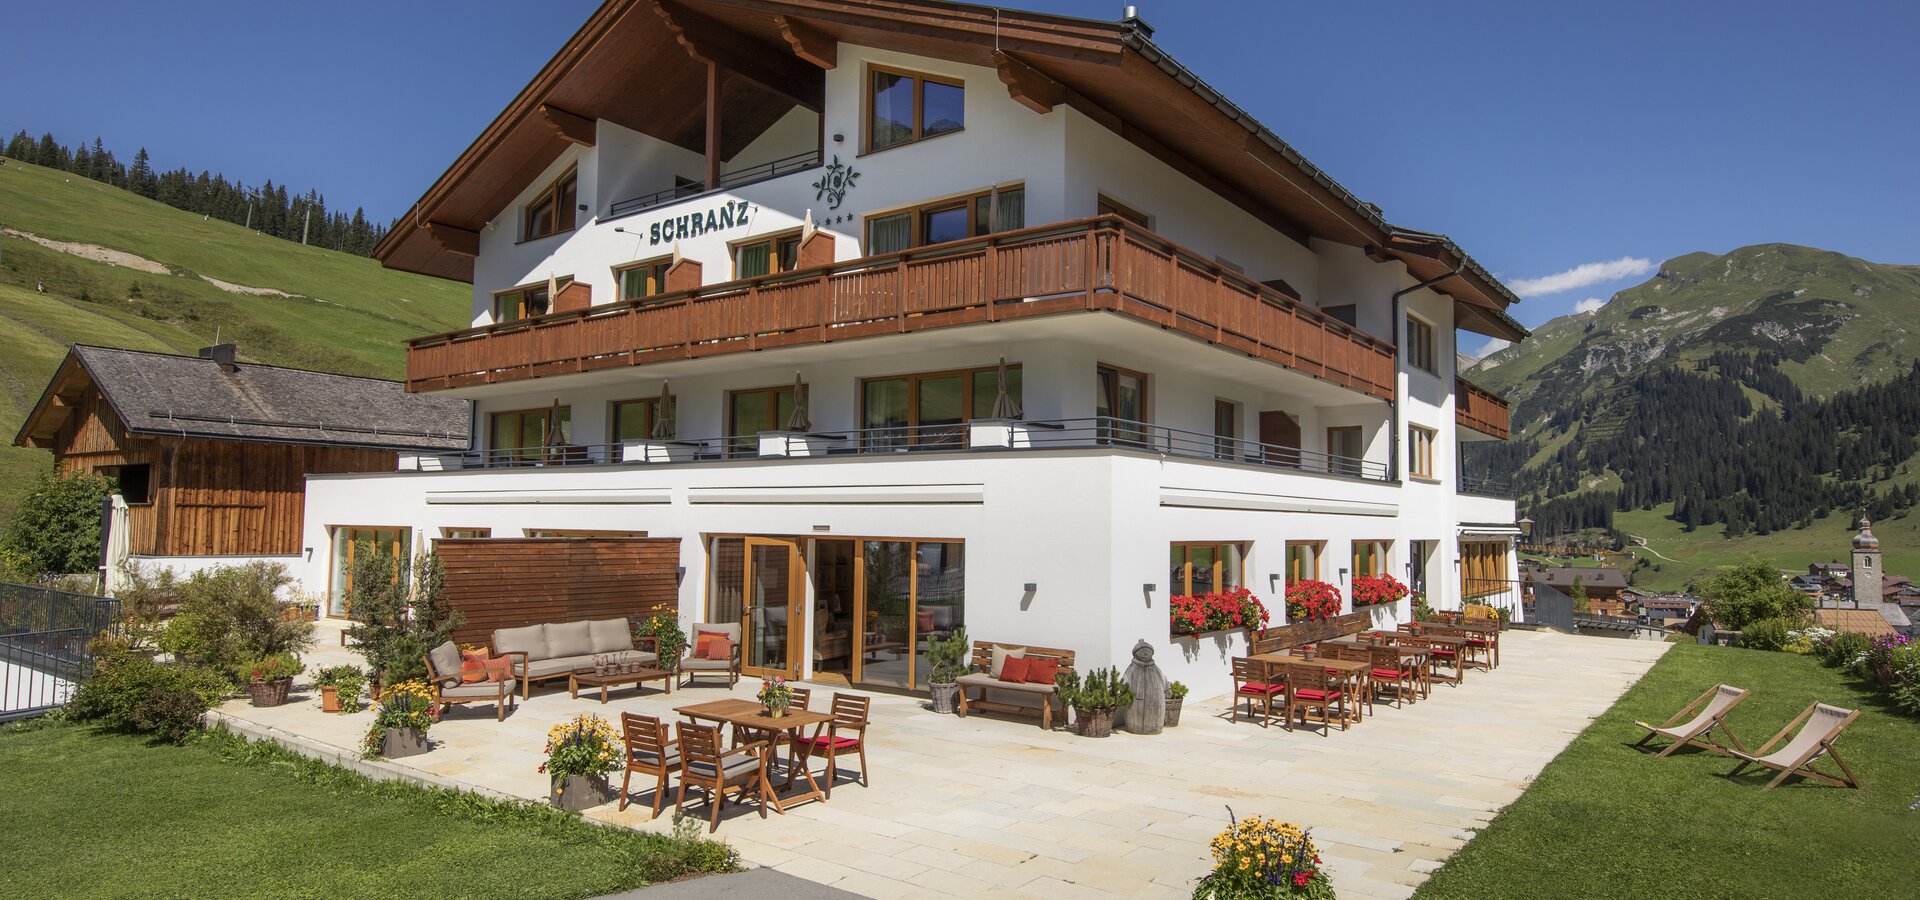 Hotel Schranz at Lech